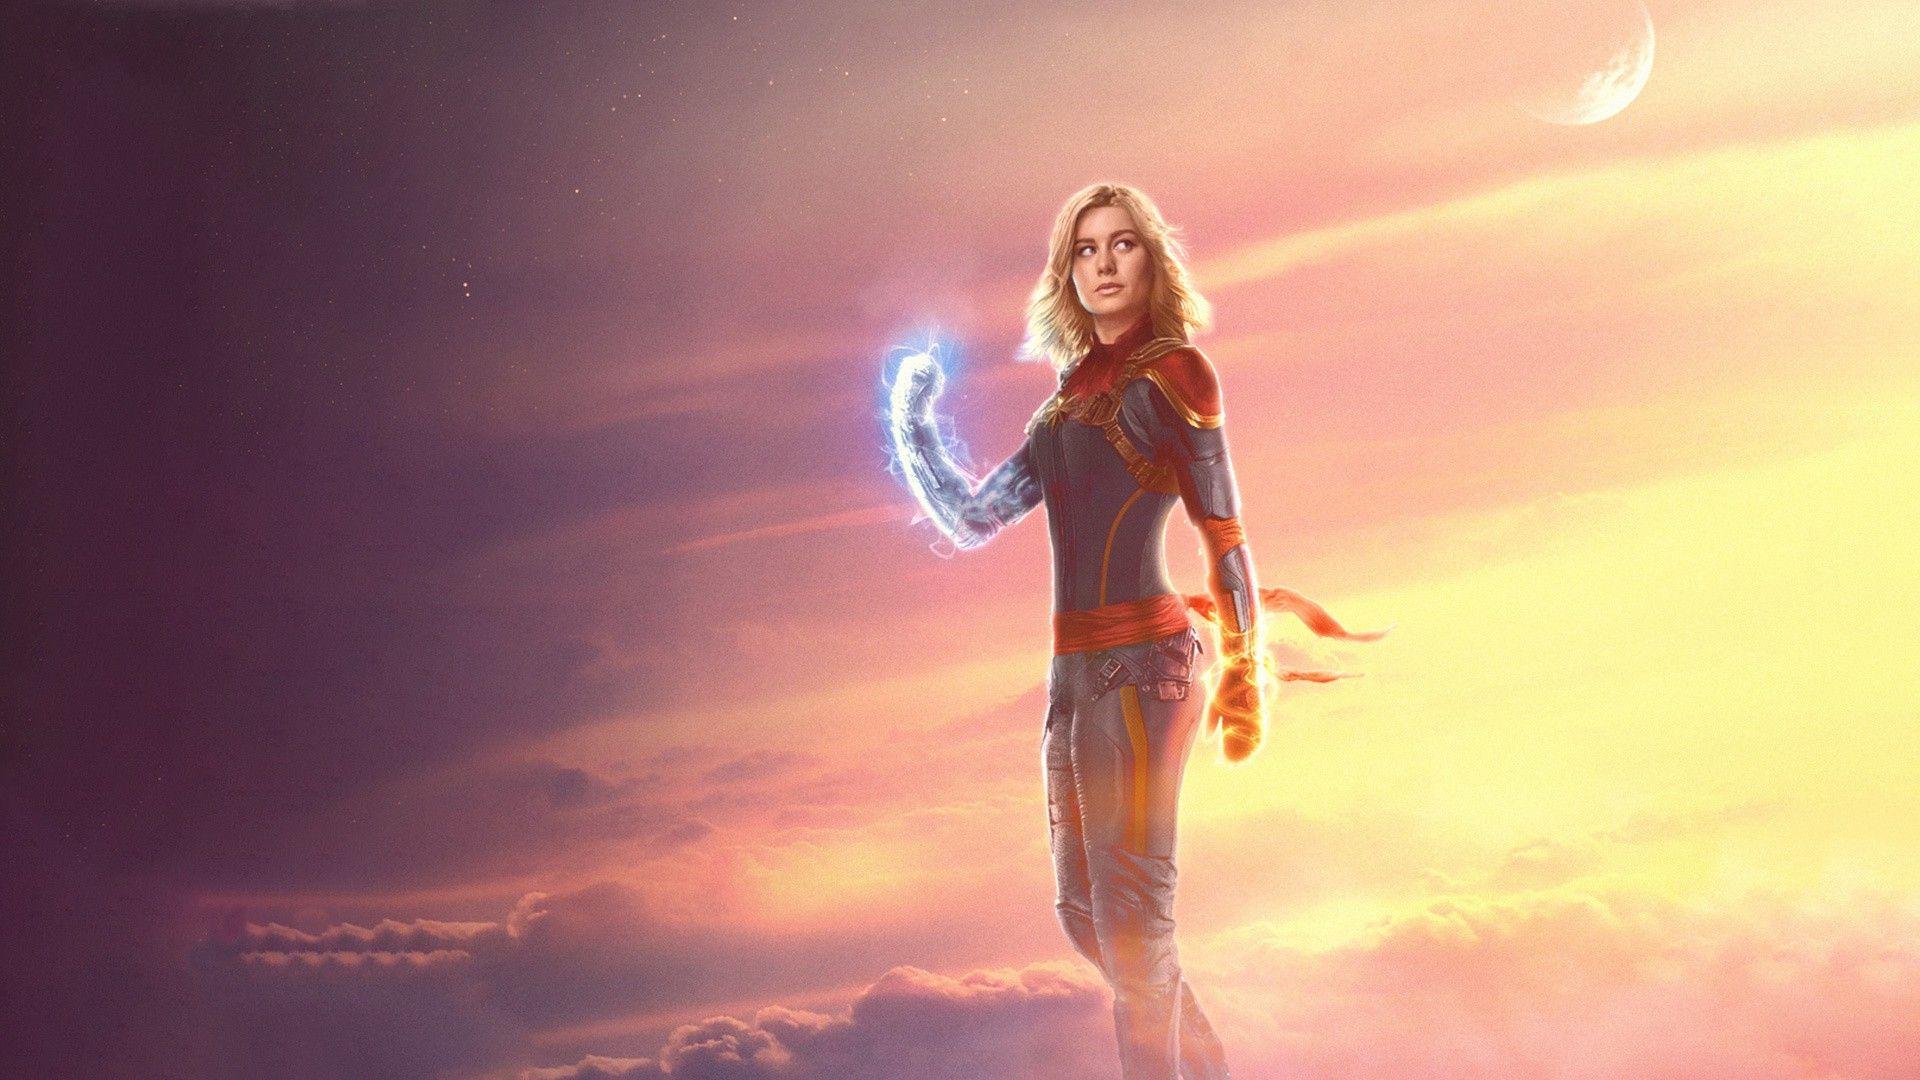 Brie Larson as Captain Marvel Wallpapers